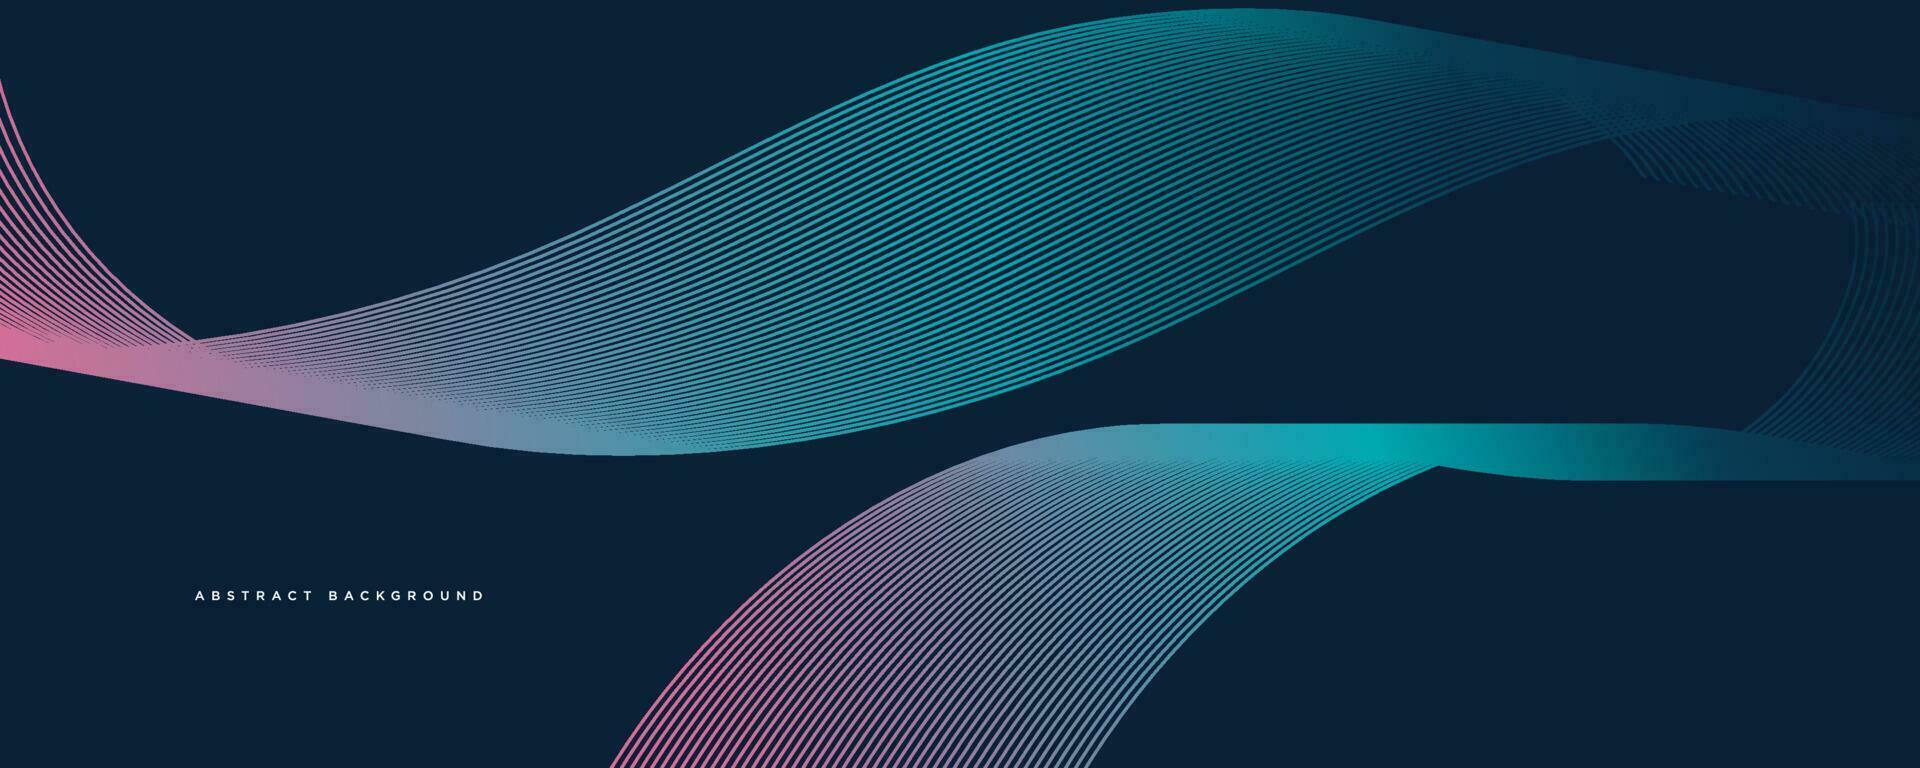 oscuro resumen antecedentes con brillante ondas. brillante Moviente línea diseño elemento. moderno azul púrpura degradado fluido ola línea. futurista tecnología concepto. vector ilustración